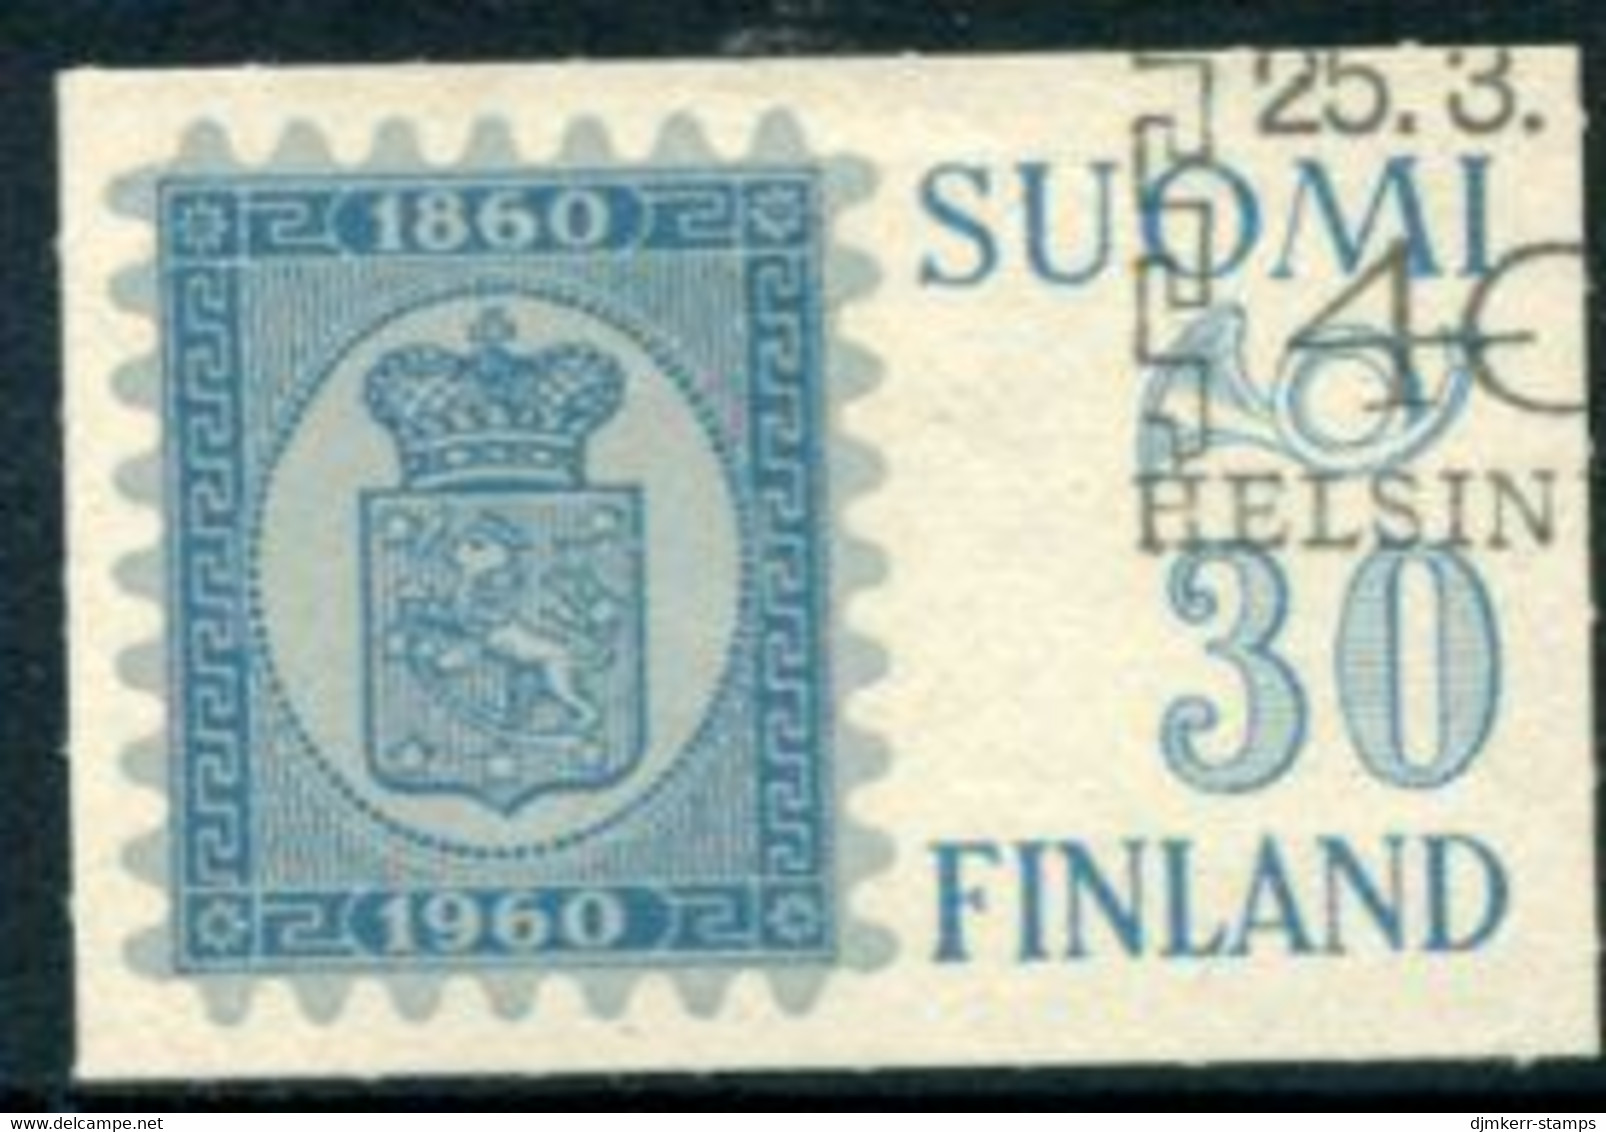 FINLAND 1960 Helsinki Philatelic Exhibition Used.. .  Michel 516 - Gebruikt